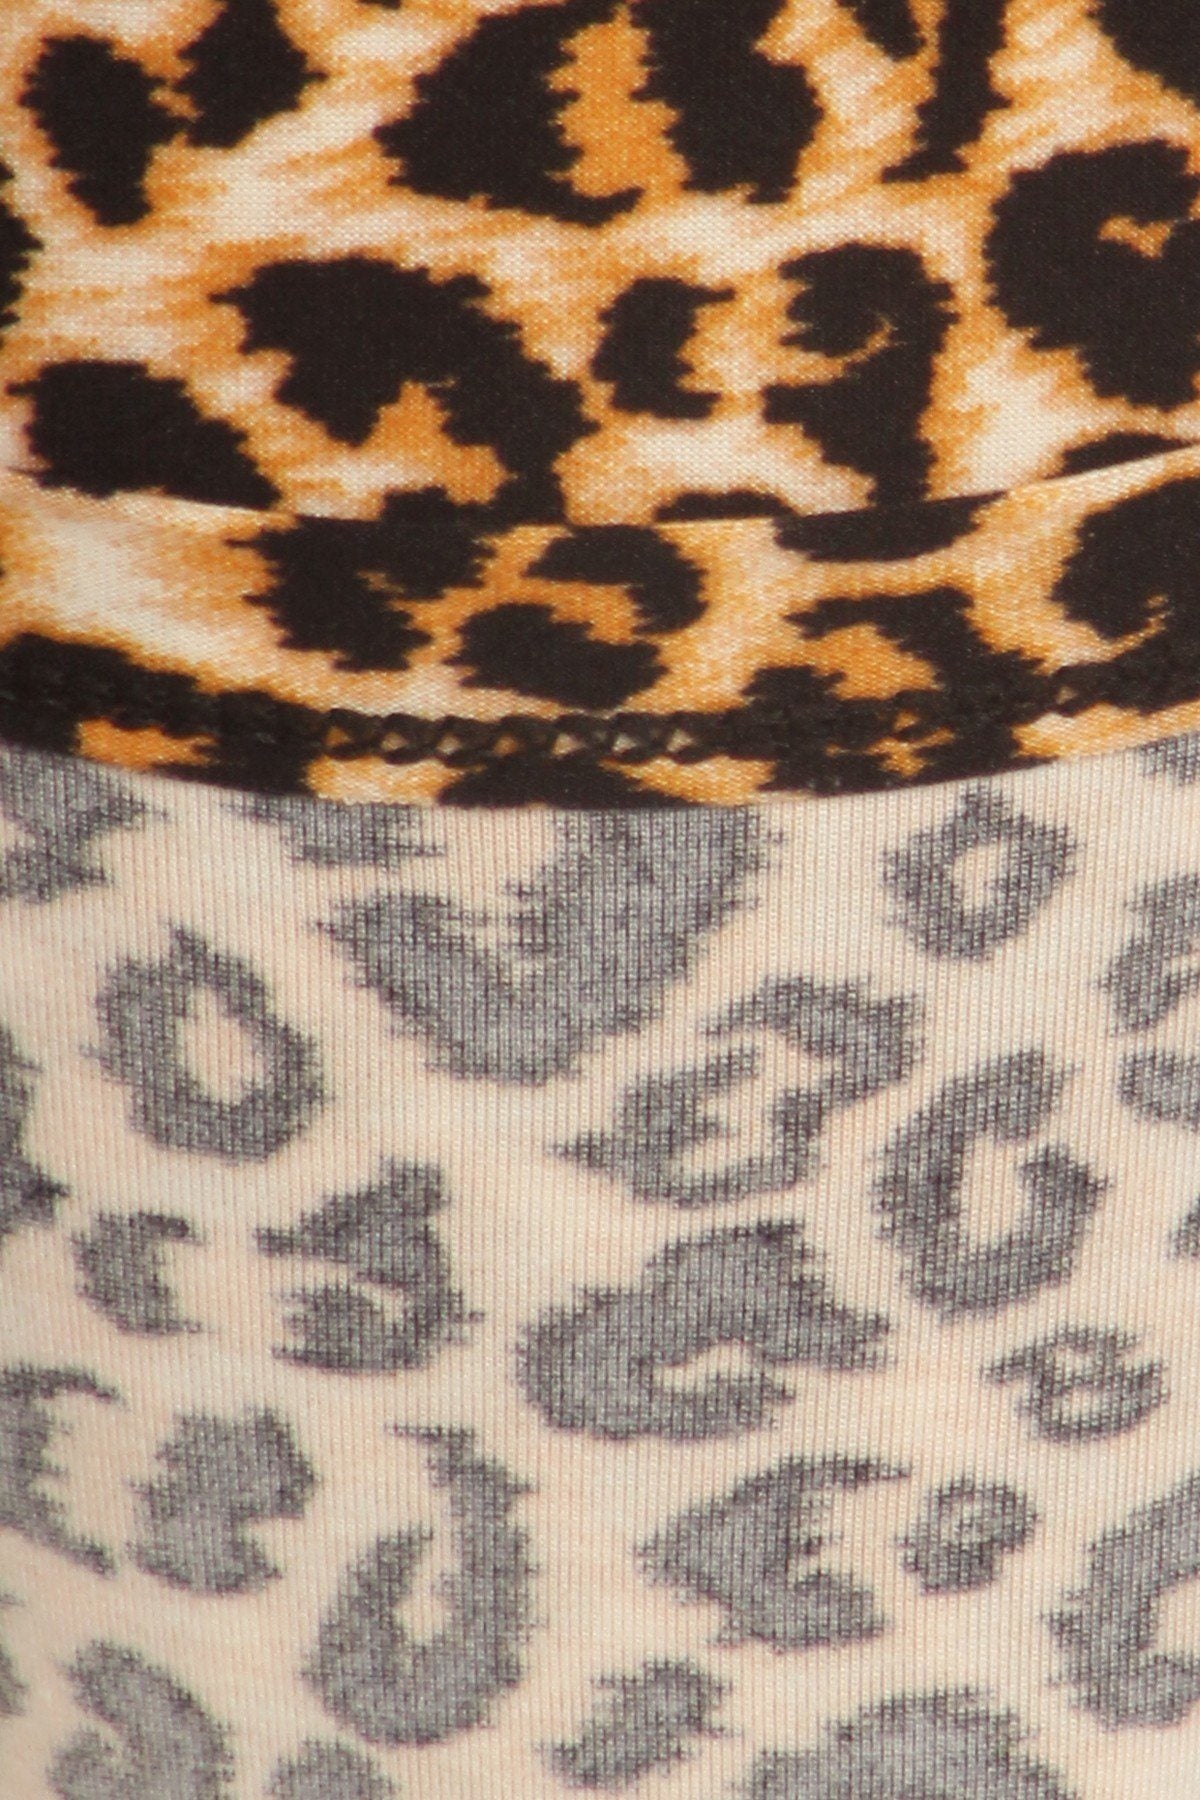 Leopard Printed Leggings